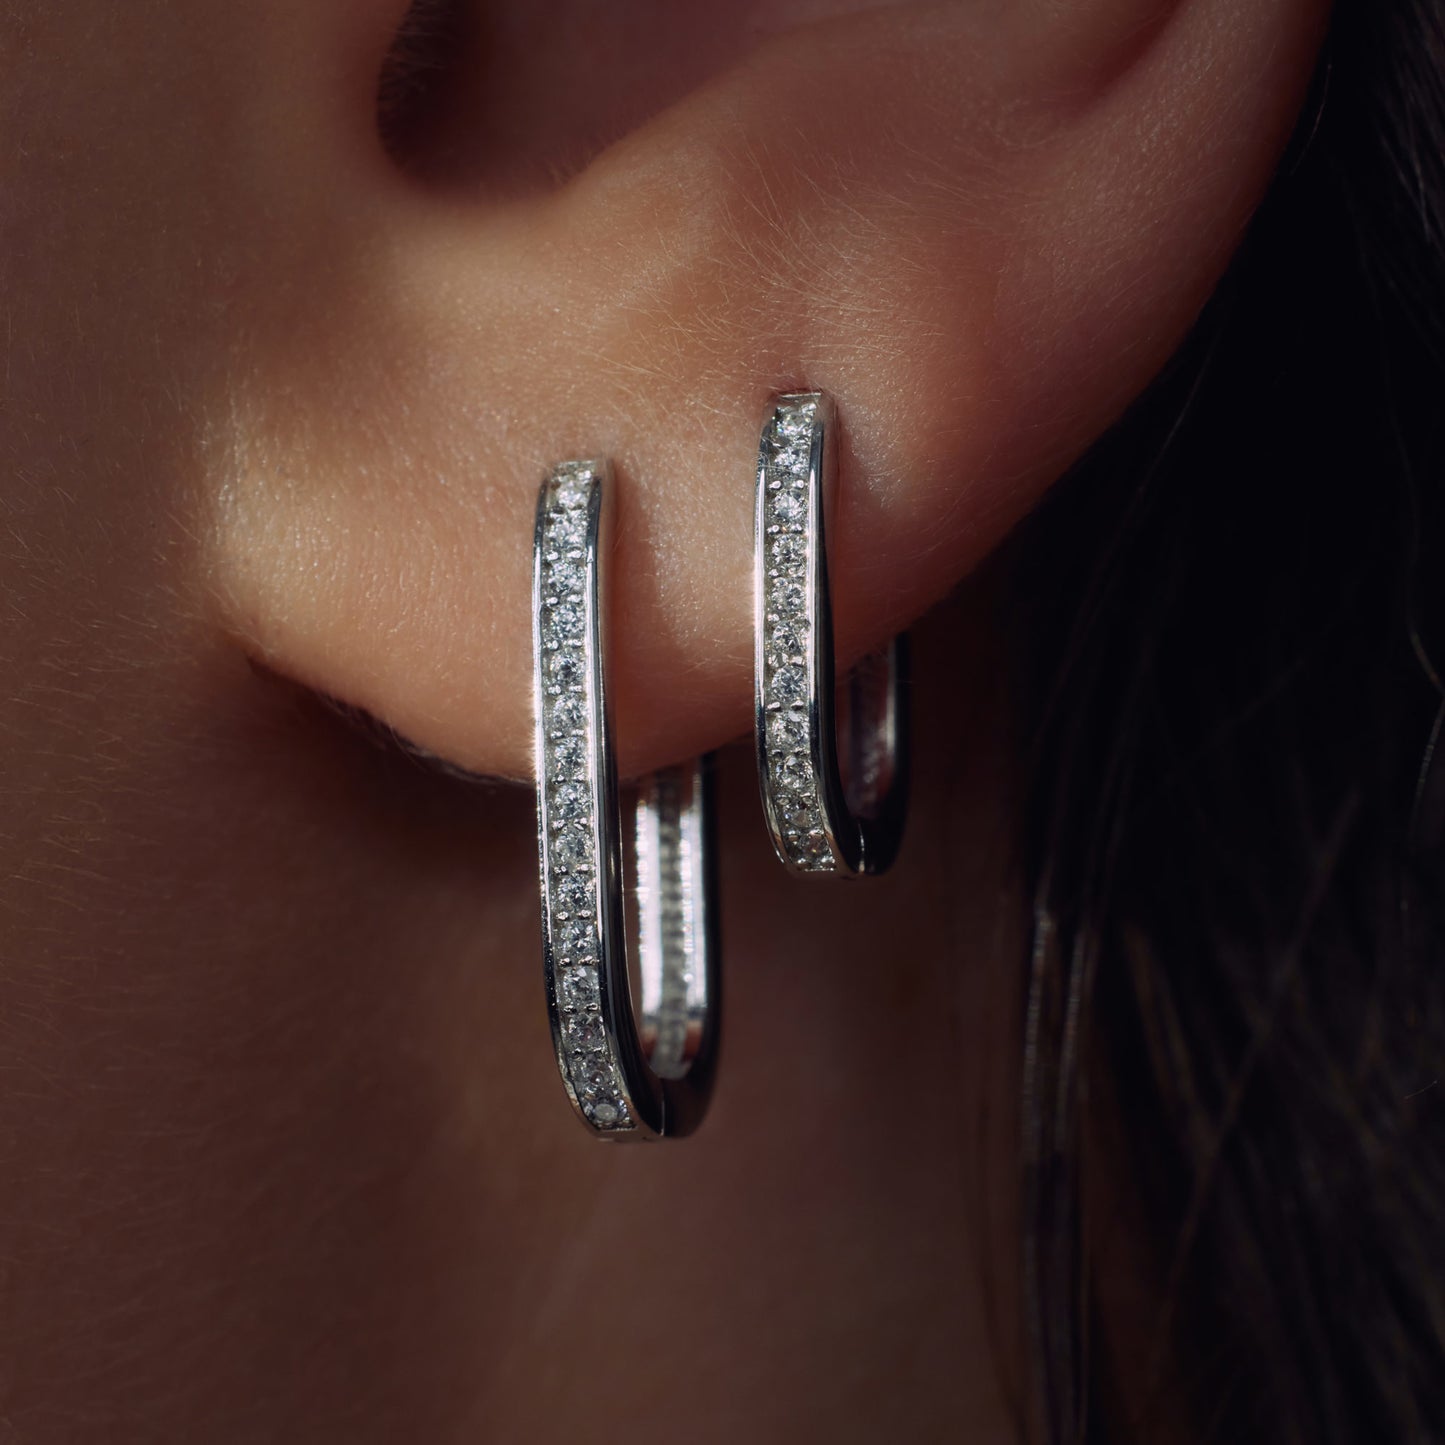 Ponte Vecchio Elina 925 sterling silver hoop earrings with zirconia stones